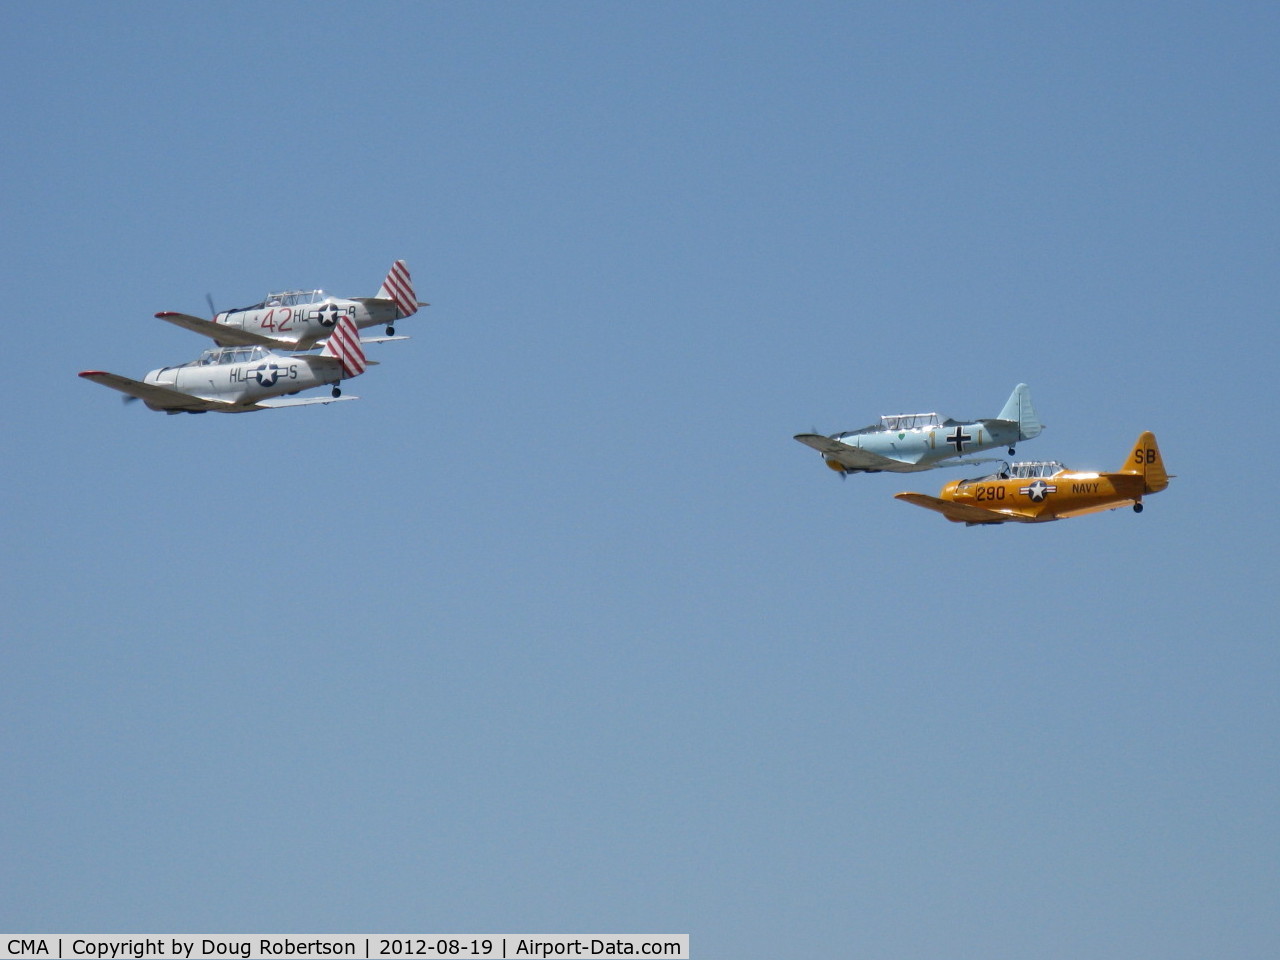 Camarillo Airport (CMA) - Condor Squadron in formation flight over 26, Wings Over Camarillo Airshow 2012.